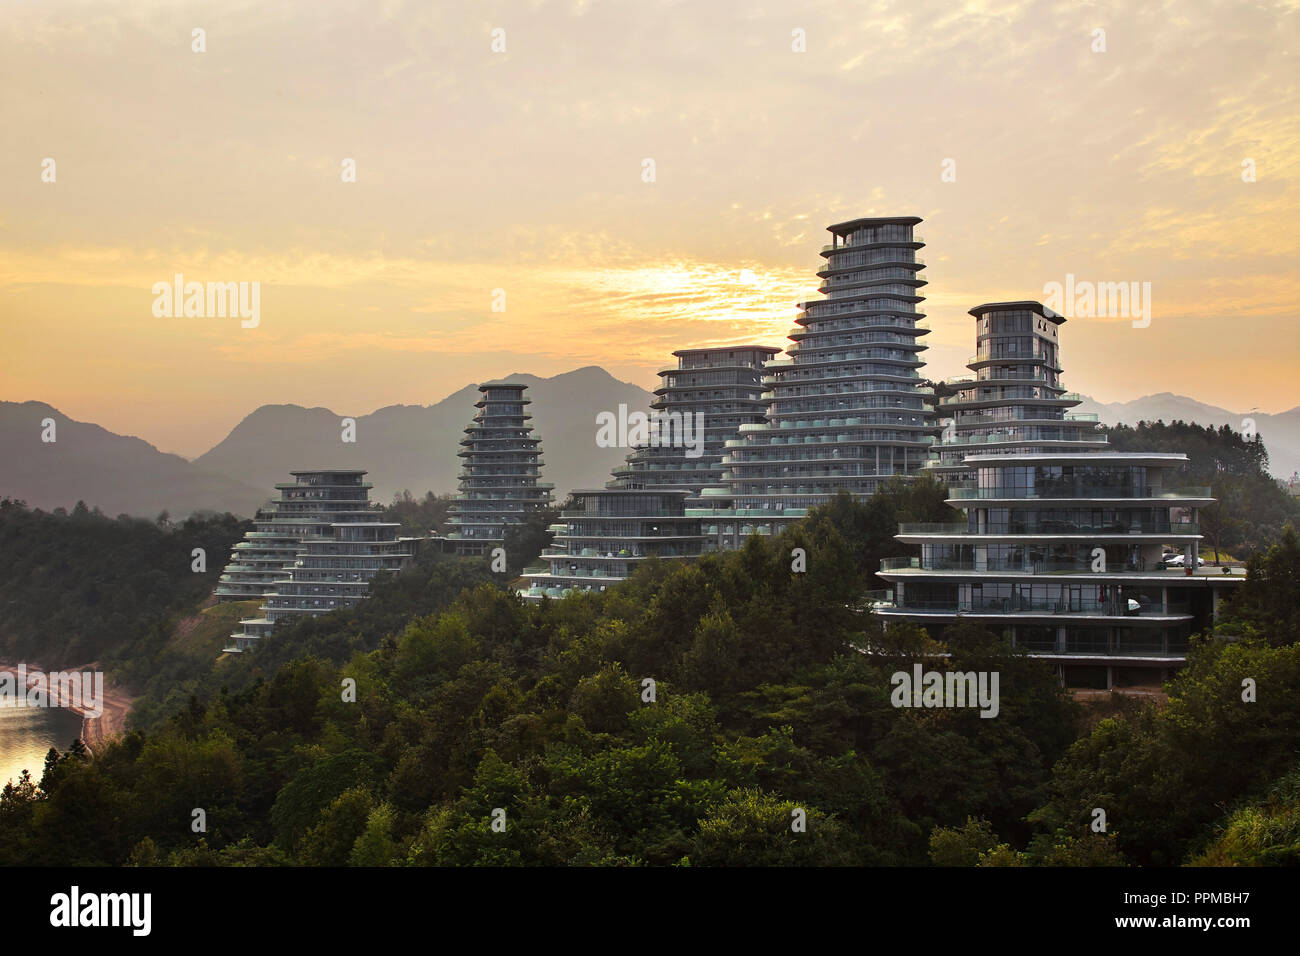 Silhouette Sonnenuntergang Ansicht des Gehäuses Cluster am Hang. Huangshan Dorf, Huangshan, China. Architekt: MAD Architekten, 2017. Stockfoto